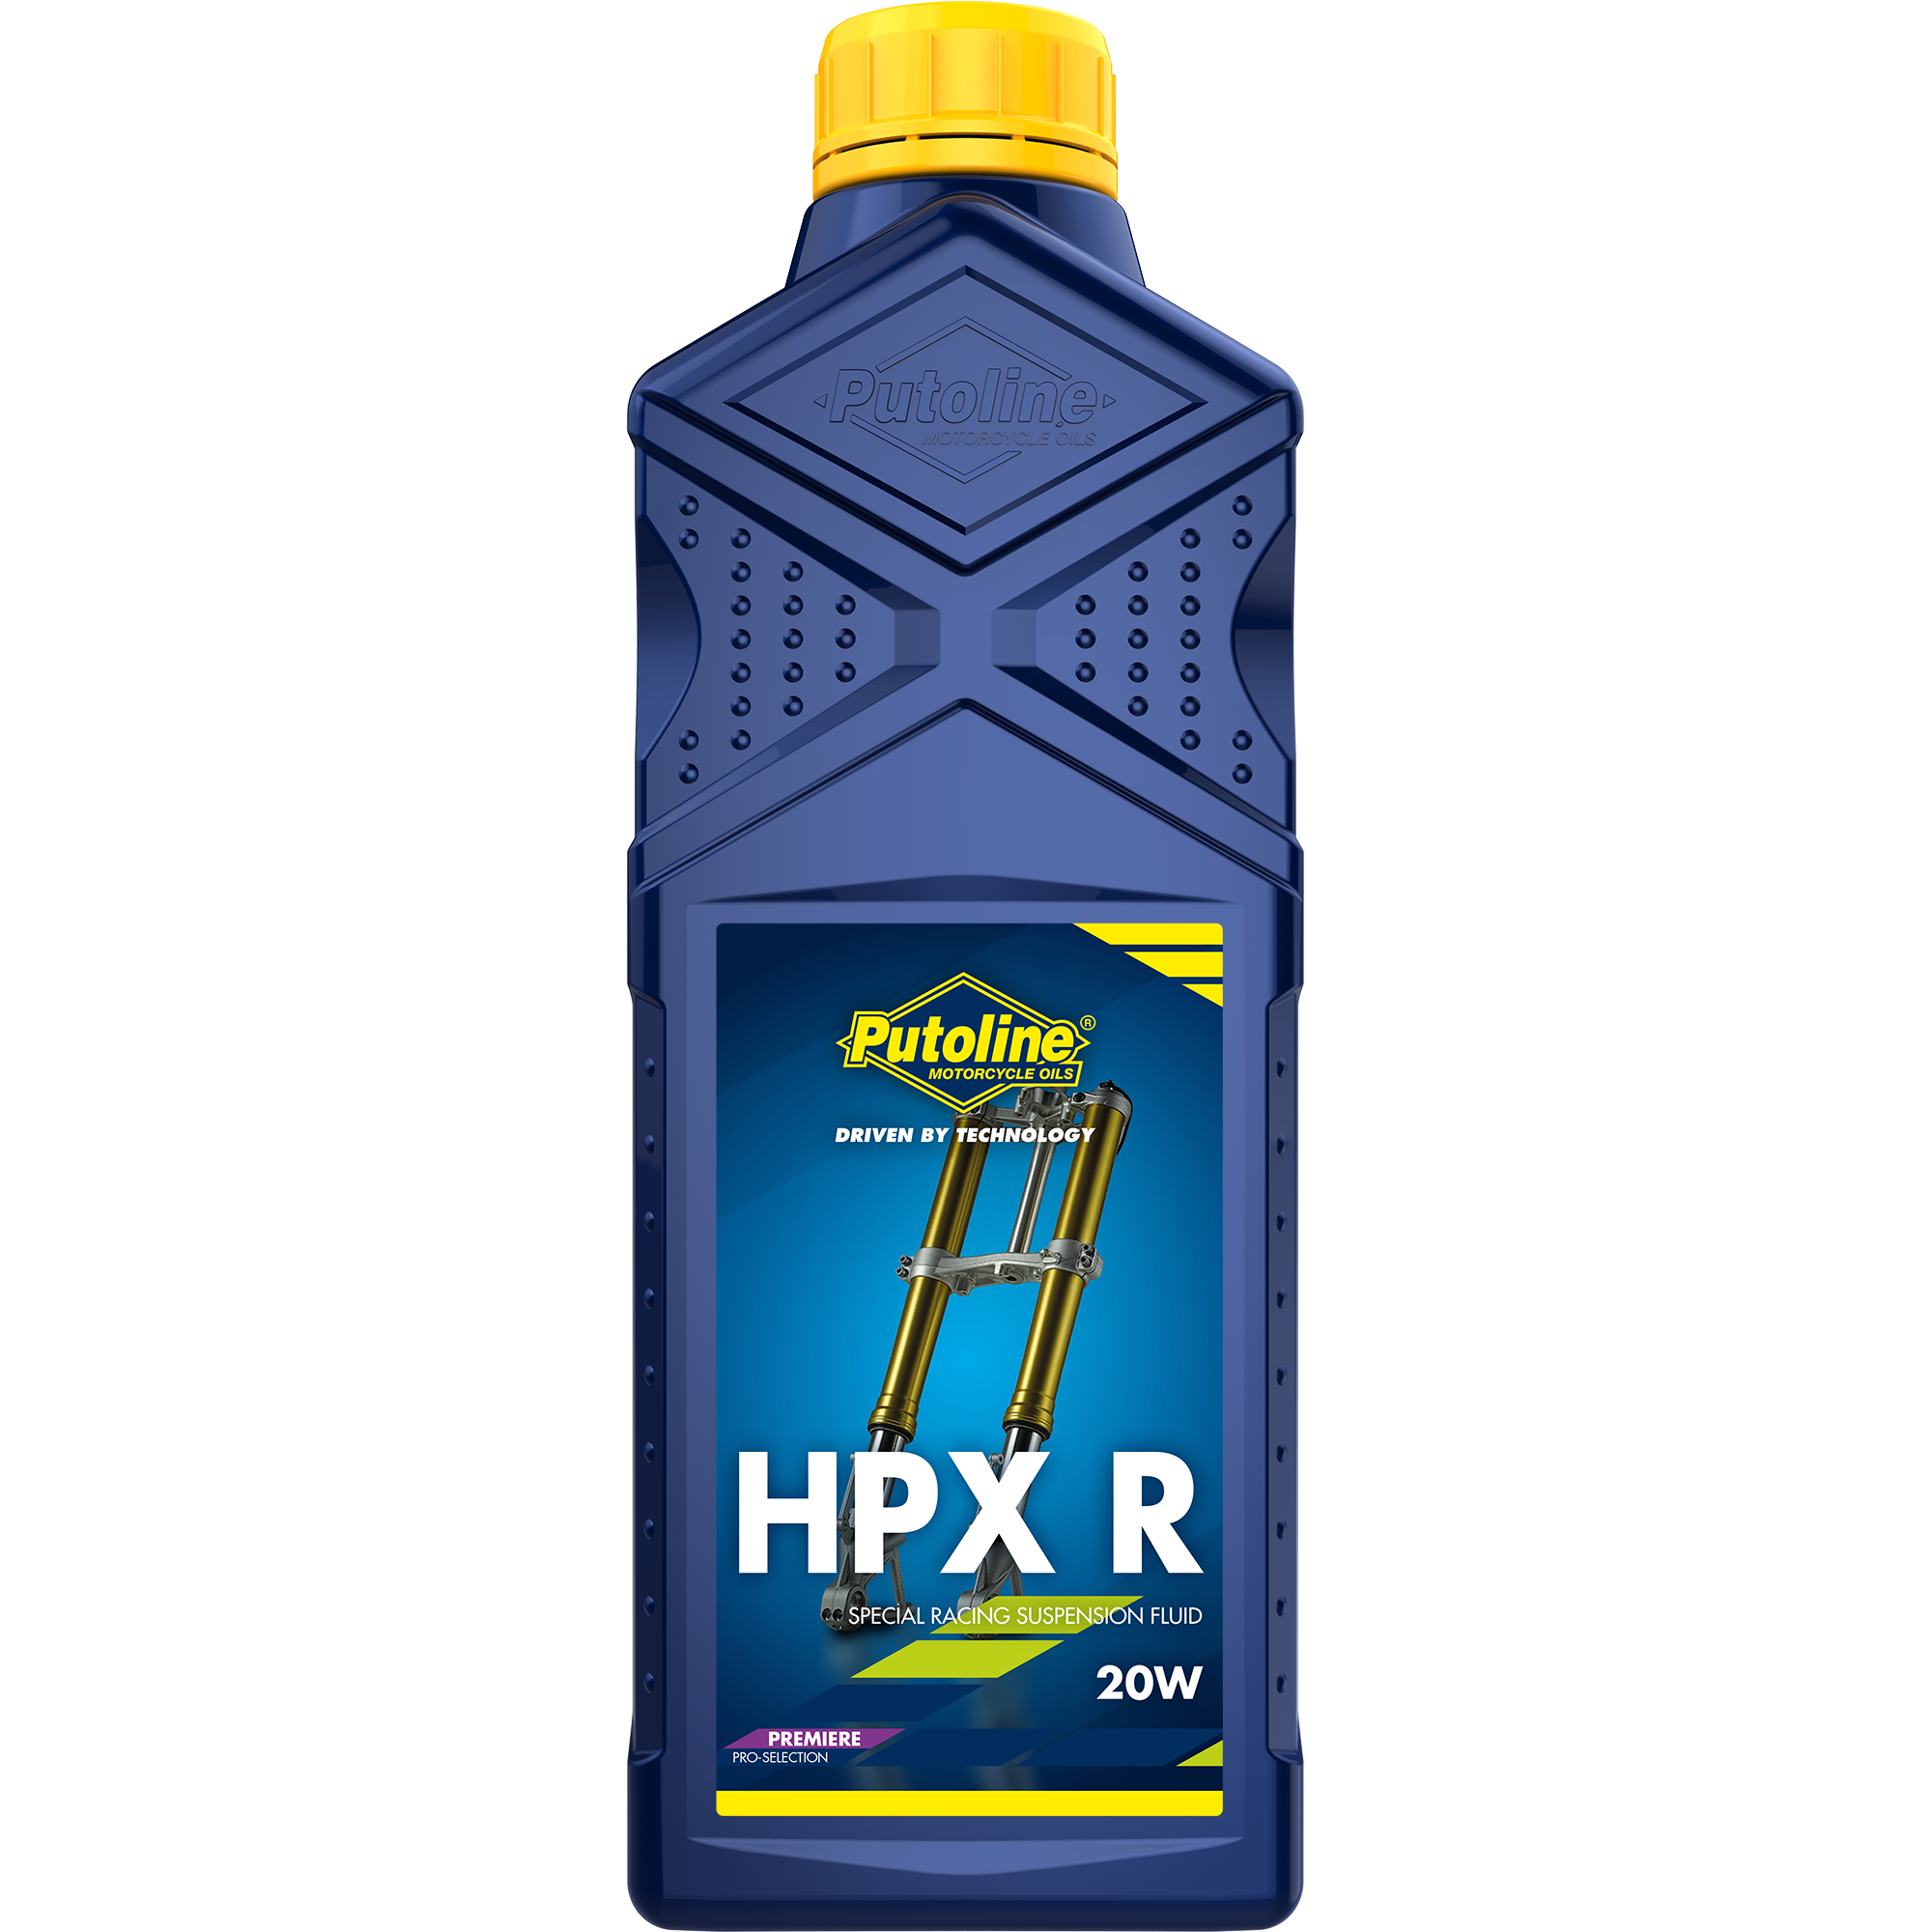 Putoline HPX R 20W, 12 x 1 lt detail 2